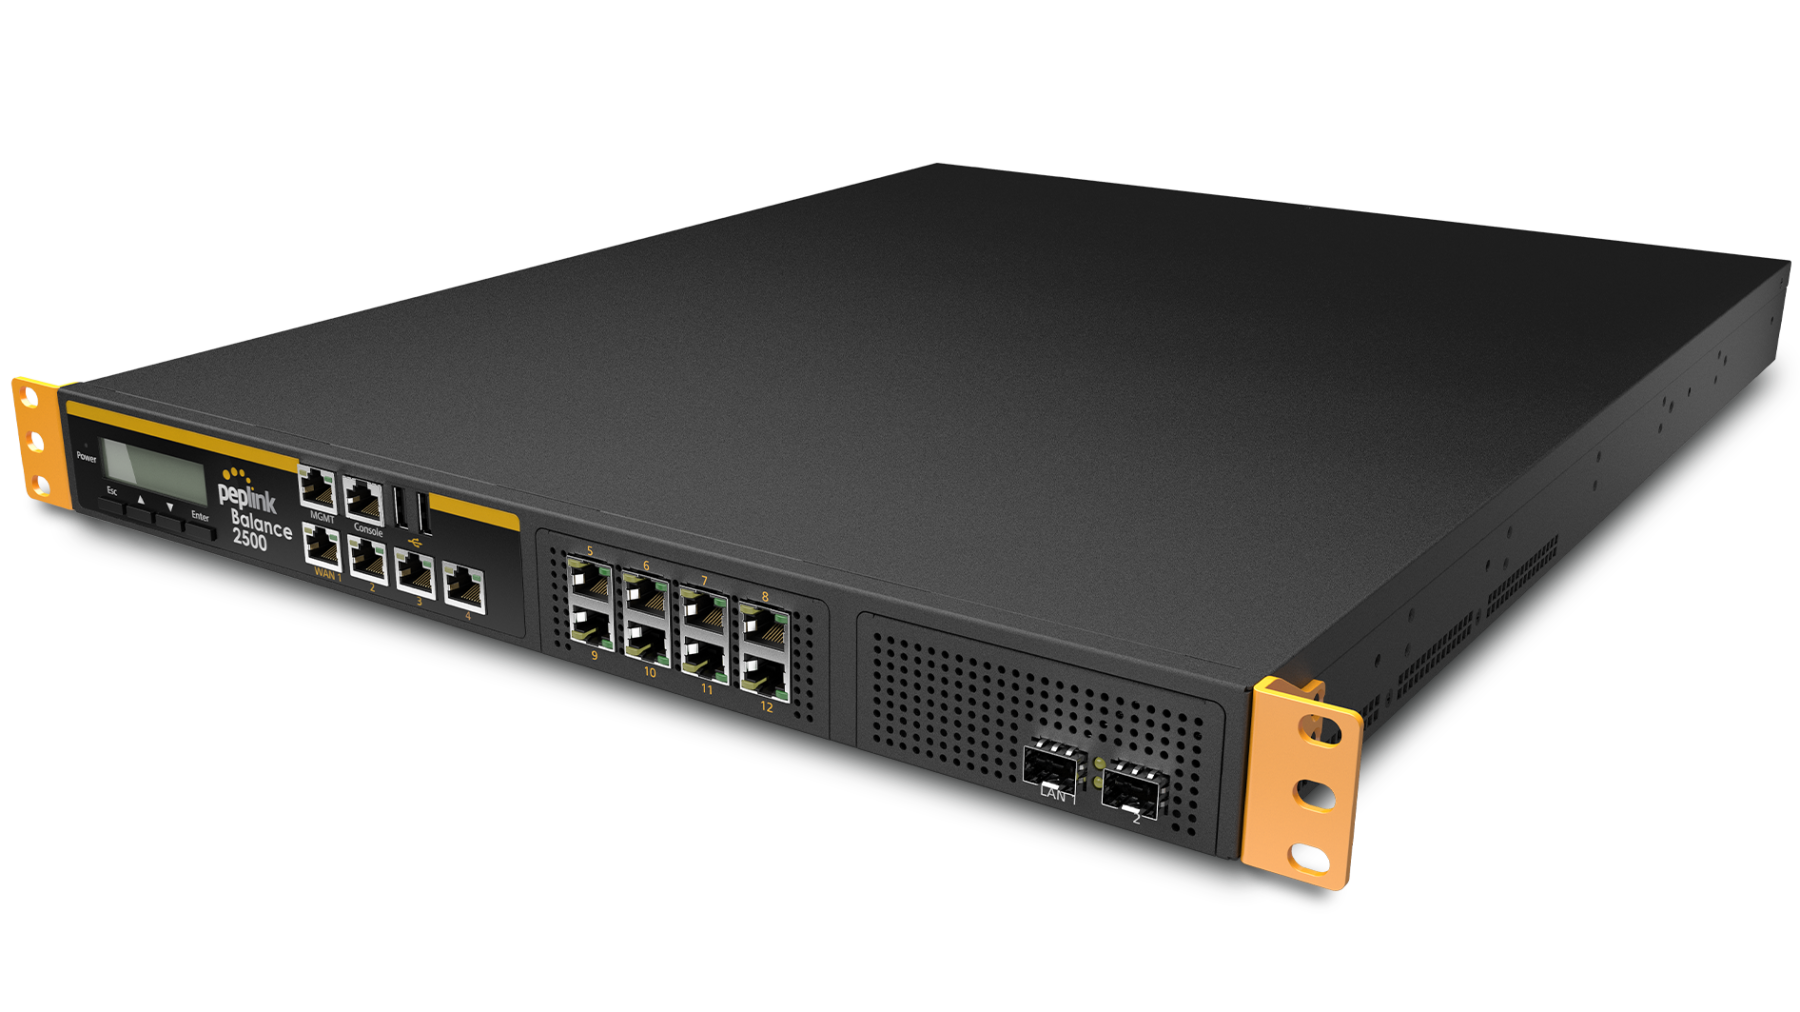  Routeurs 4G LTE Multiwan SdWan Firewall 2.5Gb Balance 2500 : routeur firewall multiWan,12 ports WAN,8 Gb, 500-5000 users